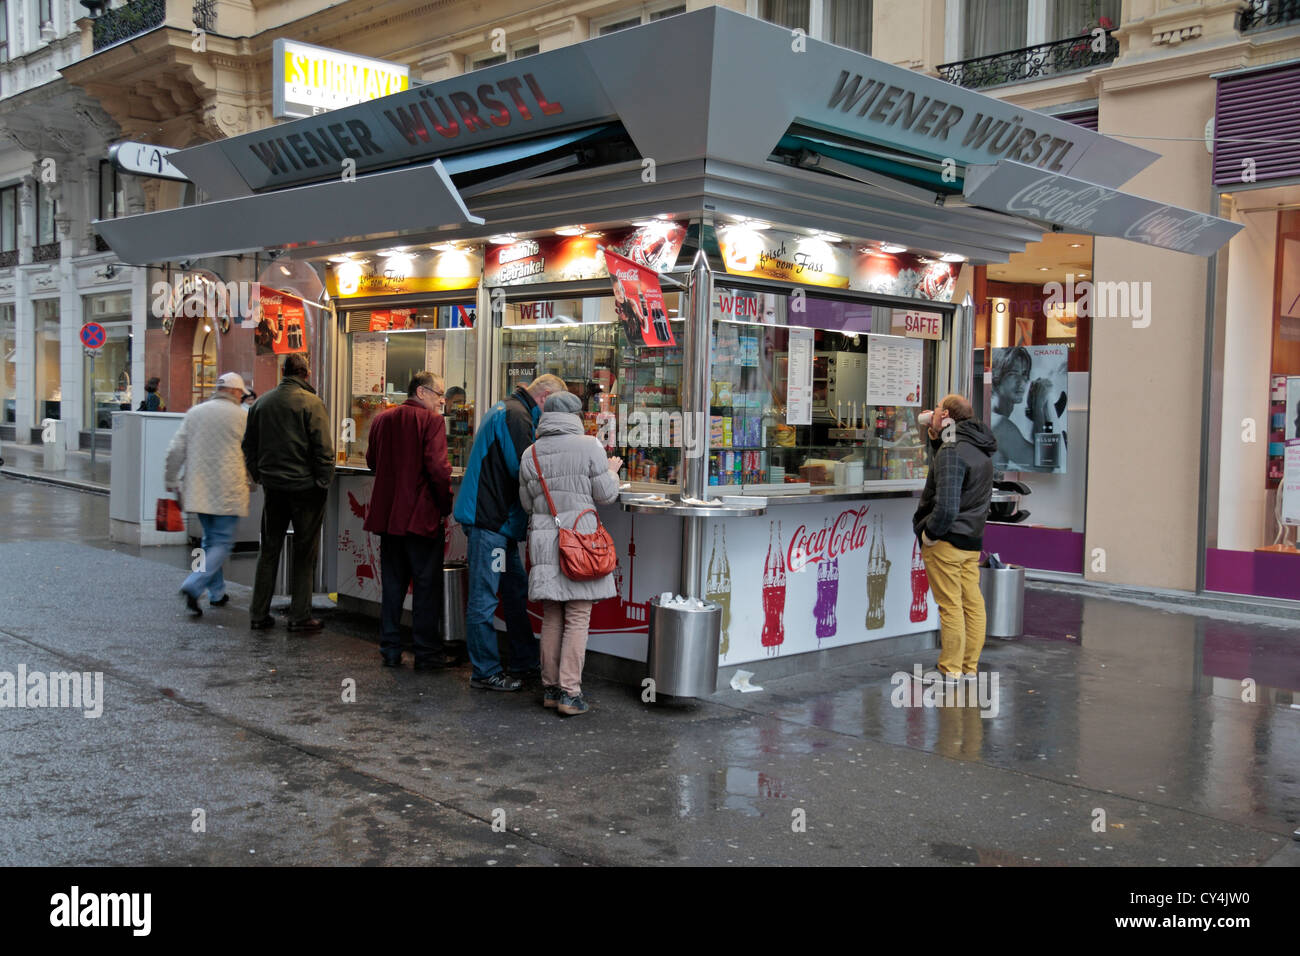 A Wiener Wurstl fast food kiosk in Vienna, Austria. Stock Photo